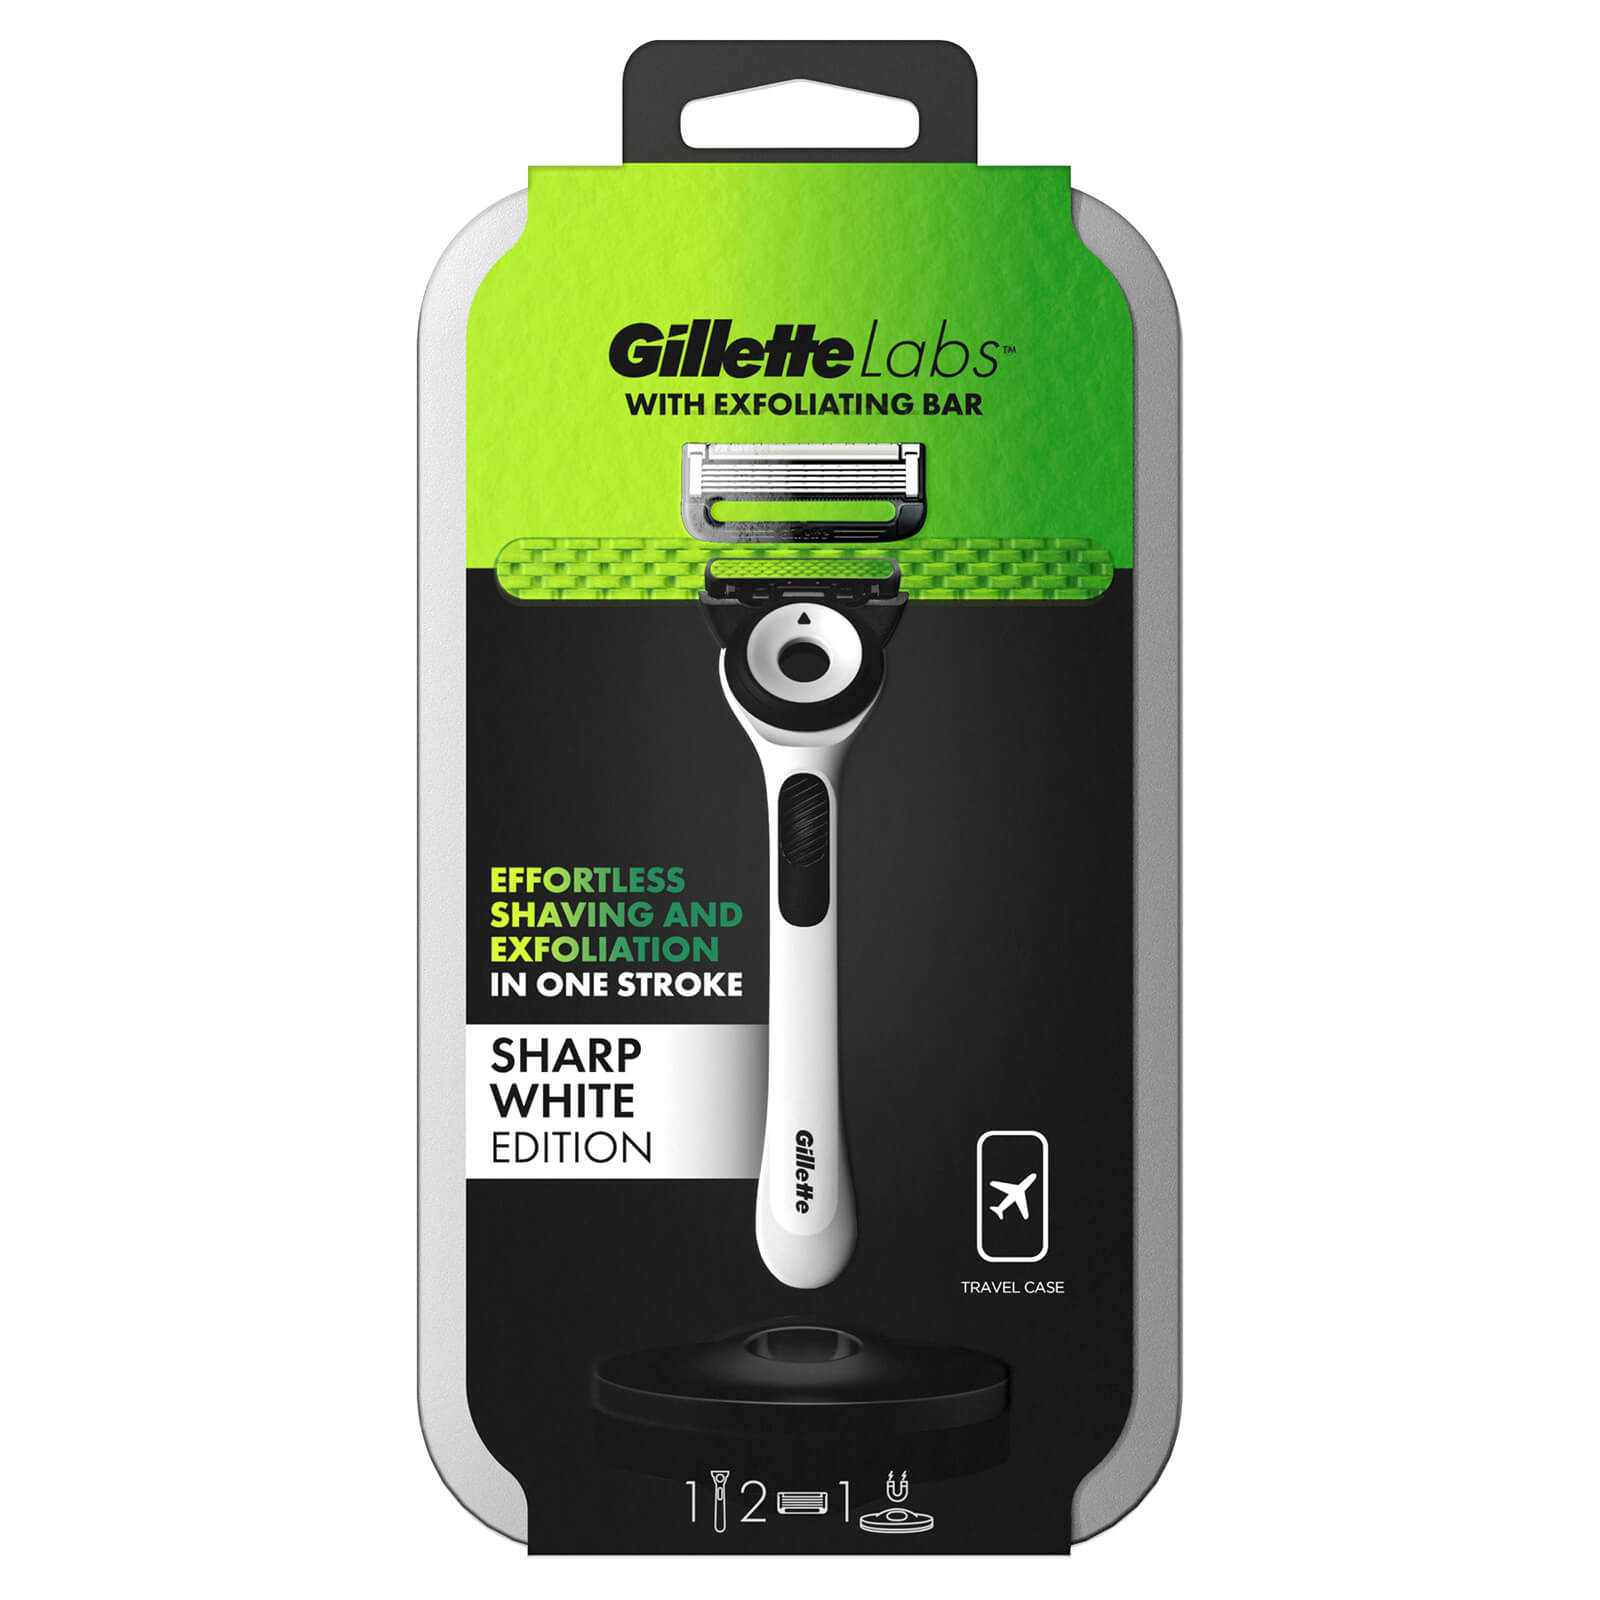 Gillette Labs Razor  Travel Case and 1 Blade Refill - Sharp White